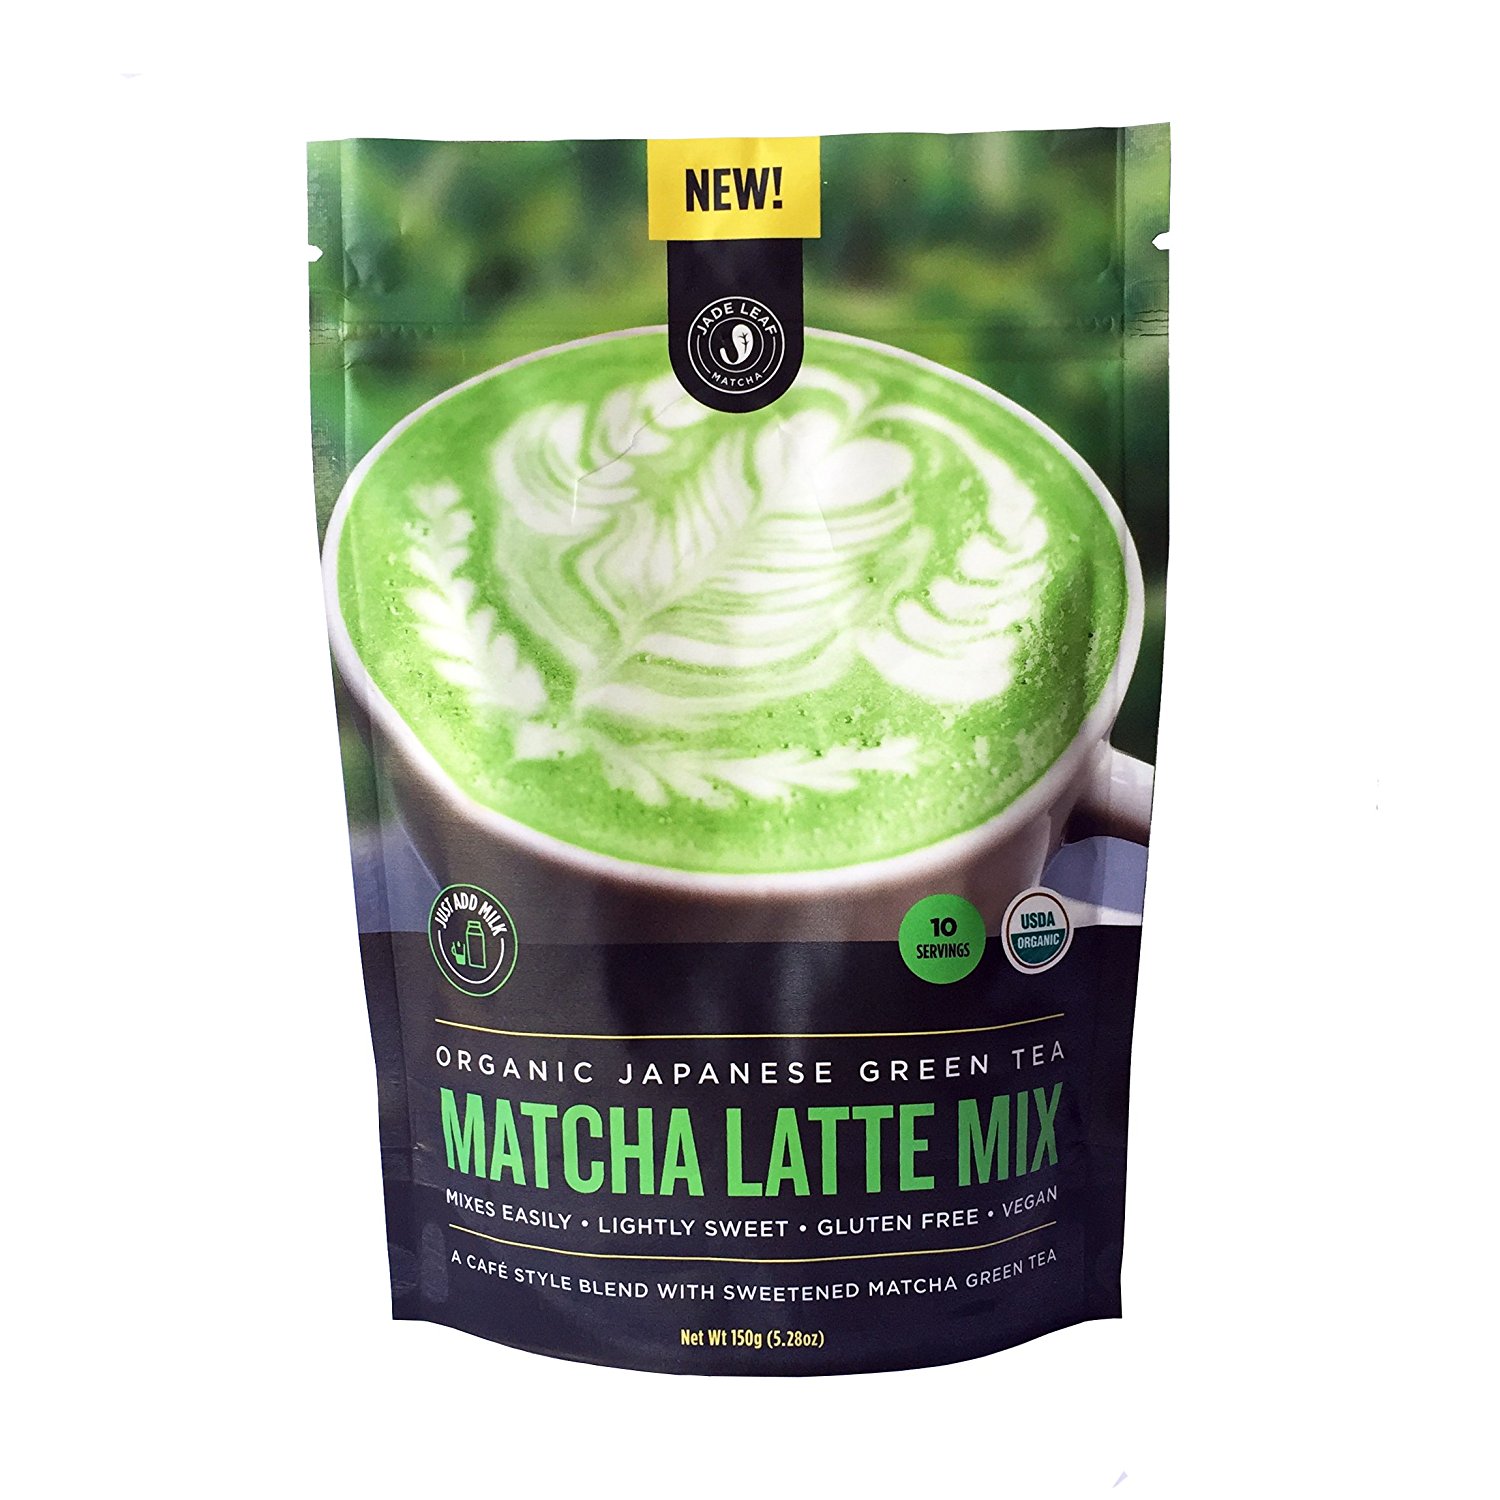 Jade Leaf - Organic Japanese Matcha Latte Mix - Make Delicious Matcha Green Tea Powder Lattes at Home [150g pouch]